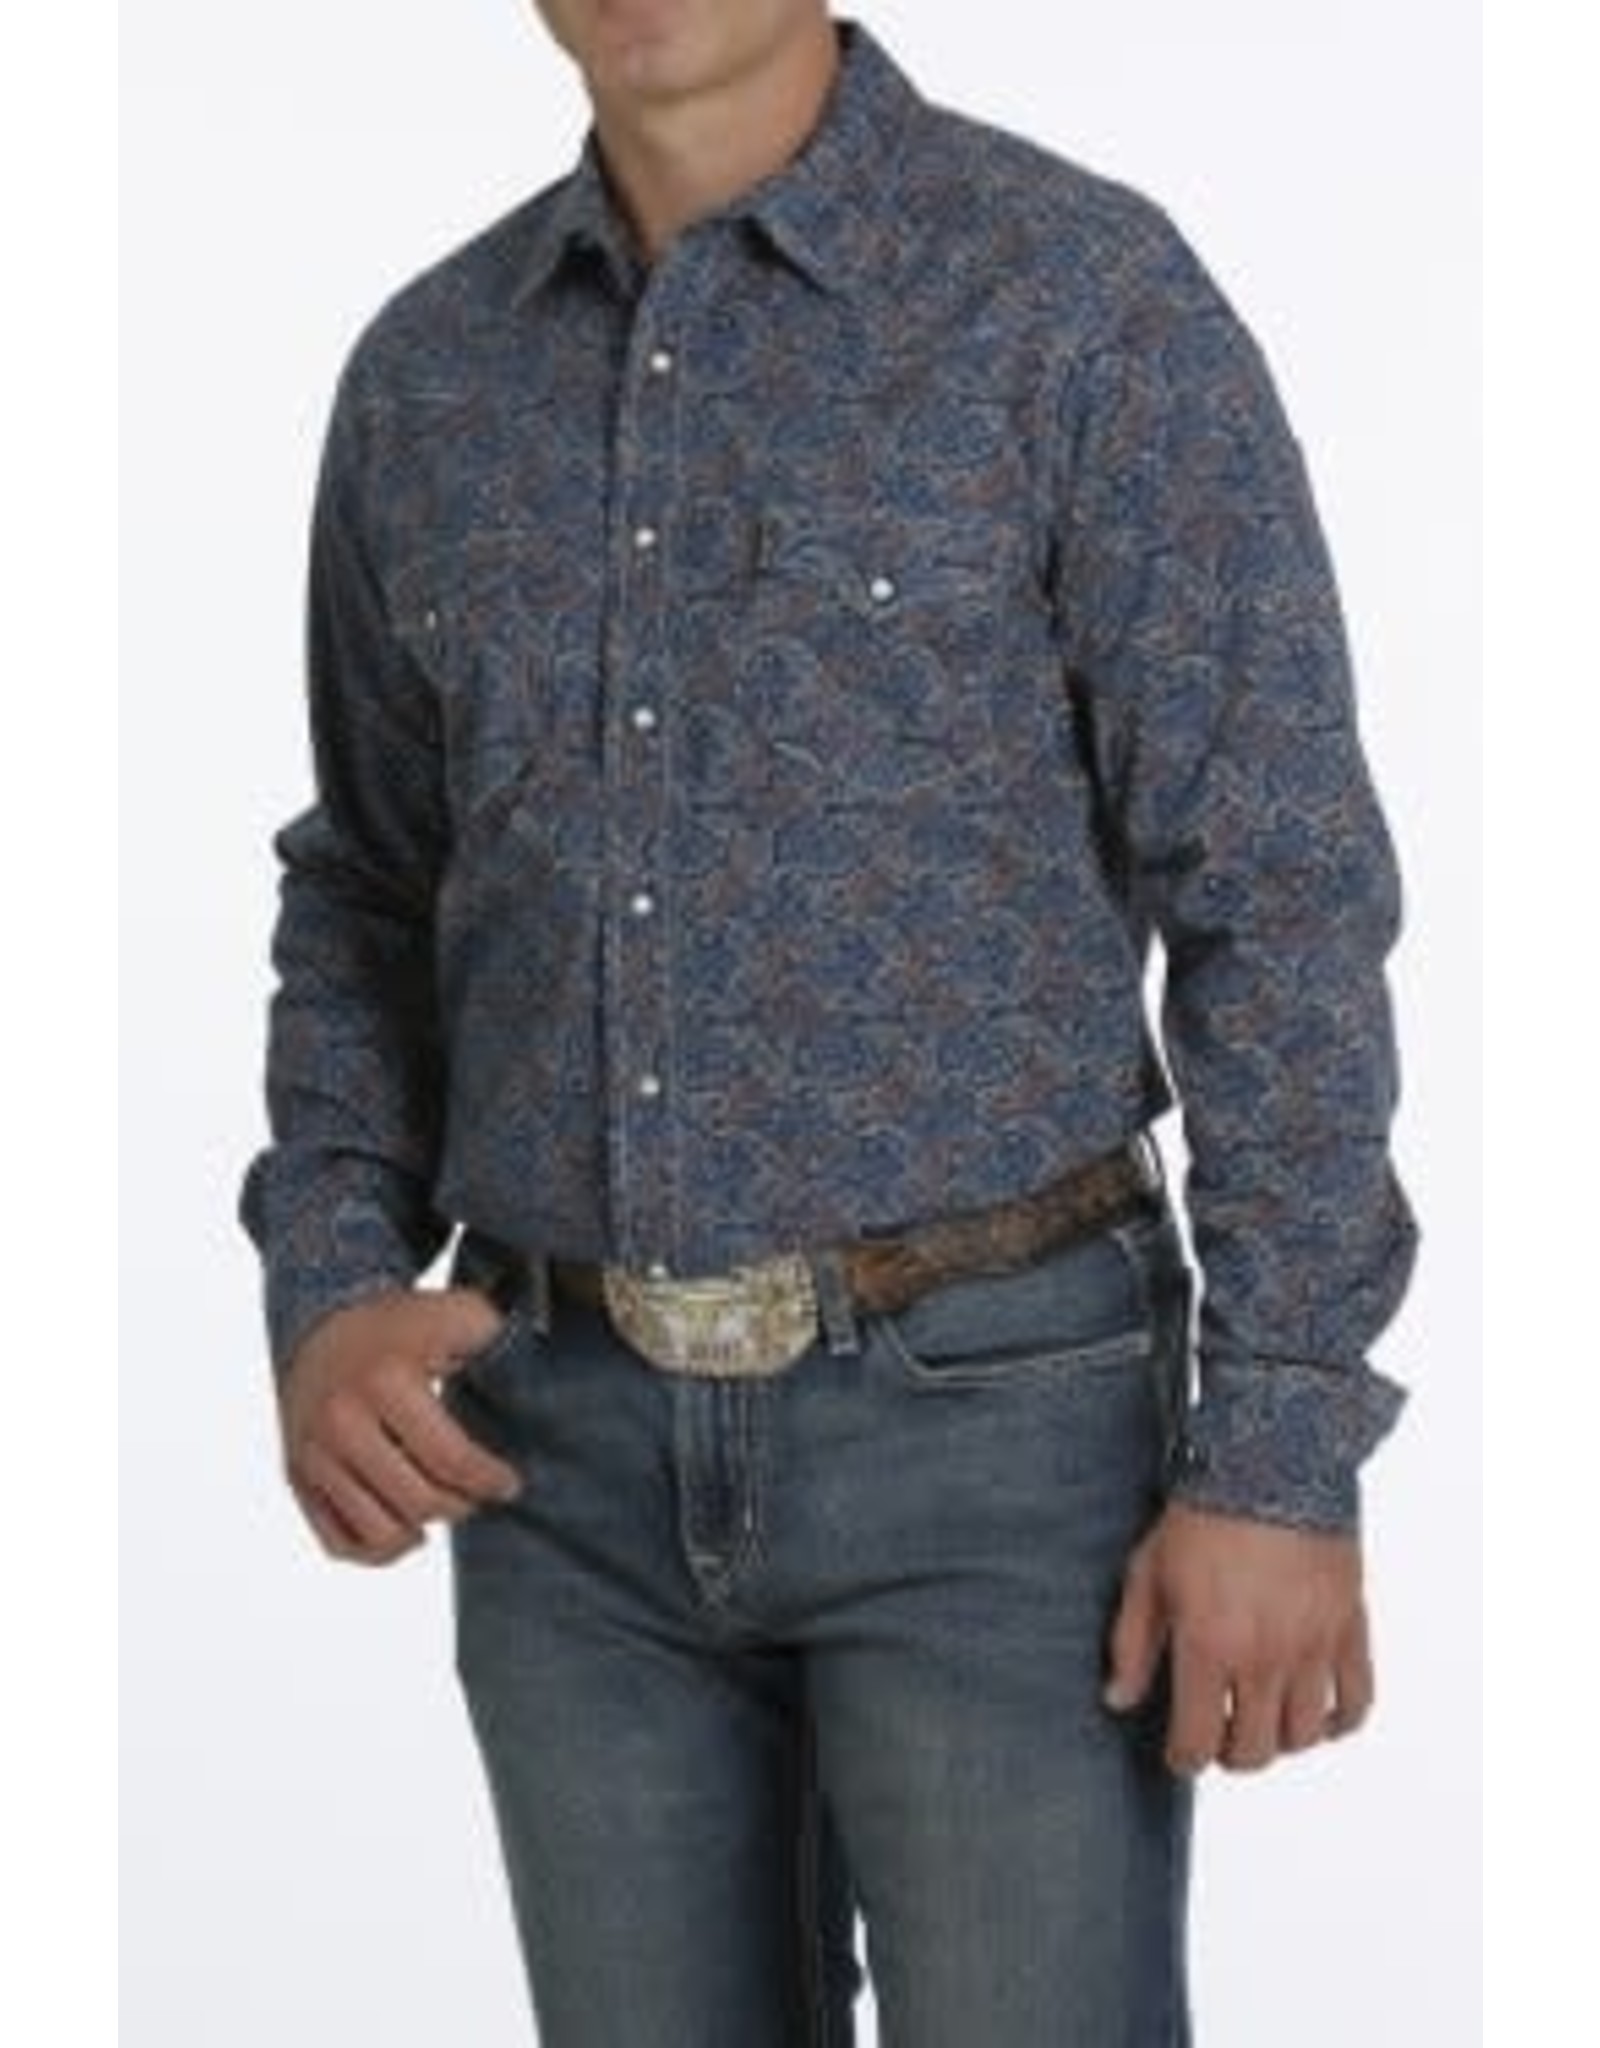 Cinch Men's Modern Fit Blue Paisley Print MTW1303052 Western Snap Shirt